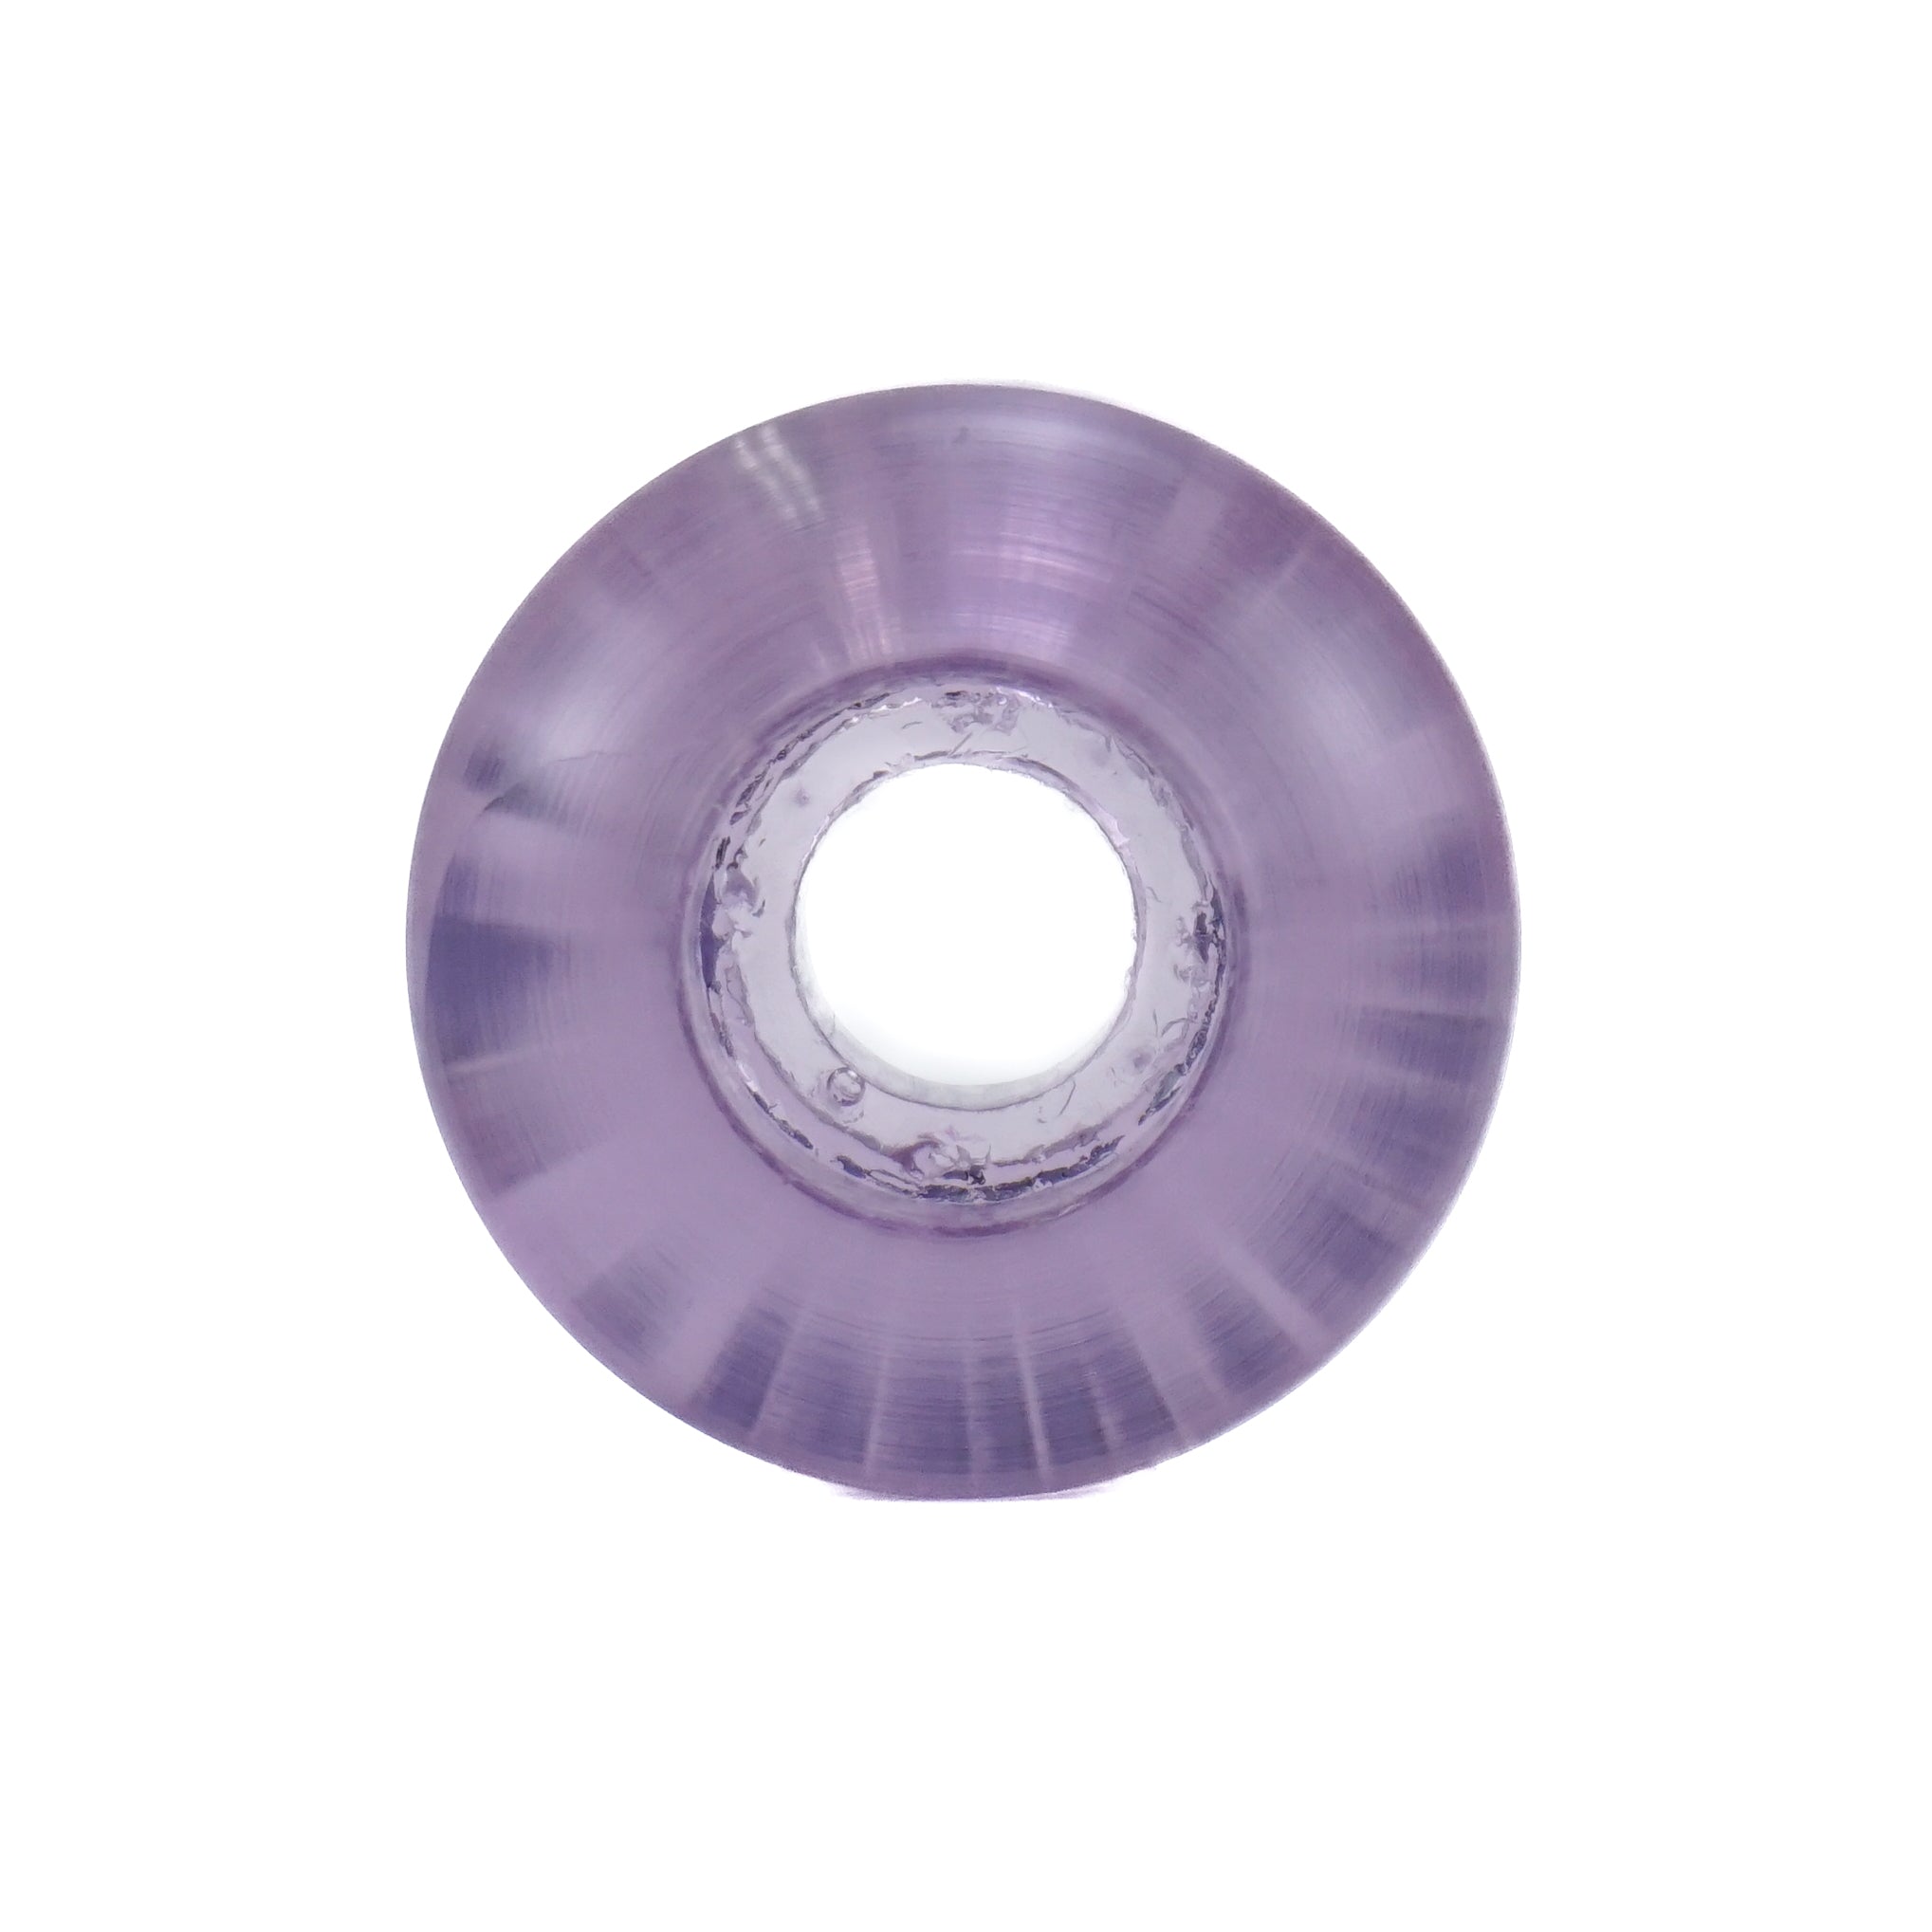 Lil' Boogers 101a - Clear Purple - 45mm